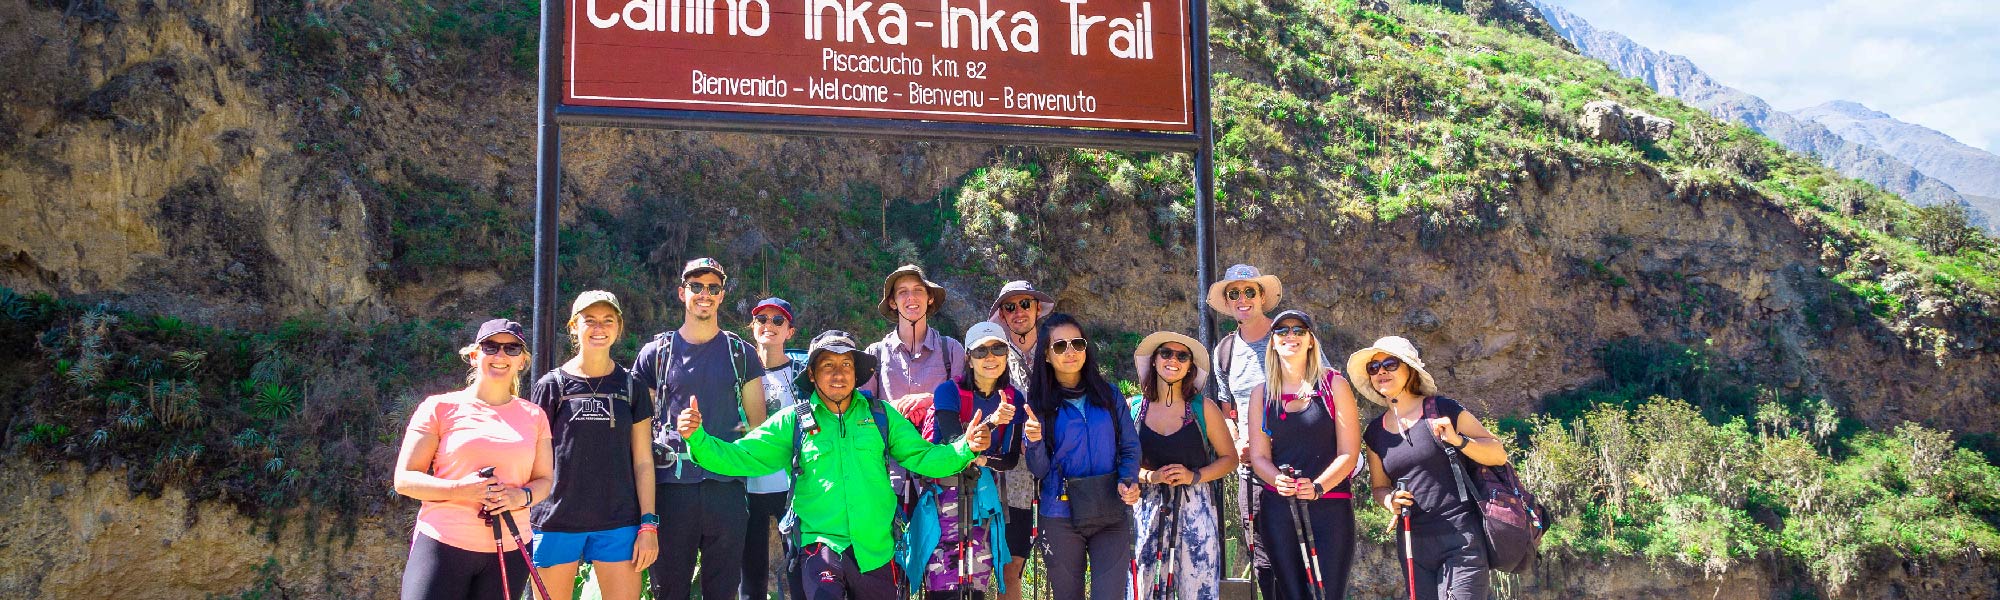 Inca Trail Trek to Machu Picchu group 4 Days 3 Nights